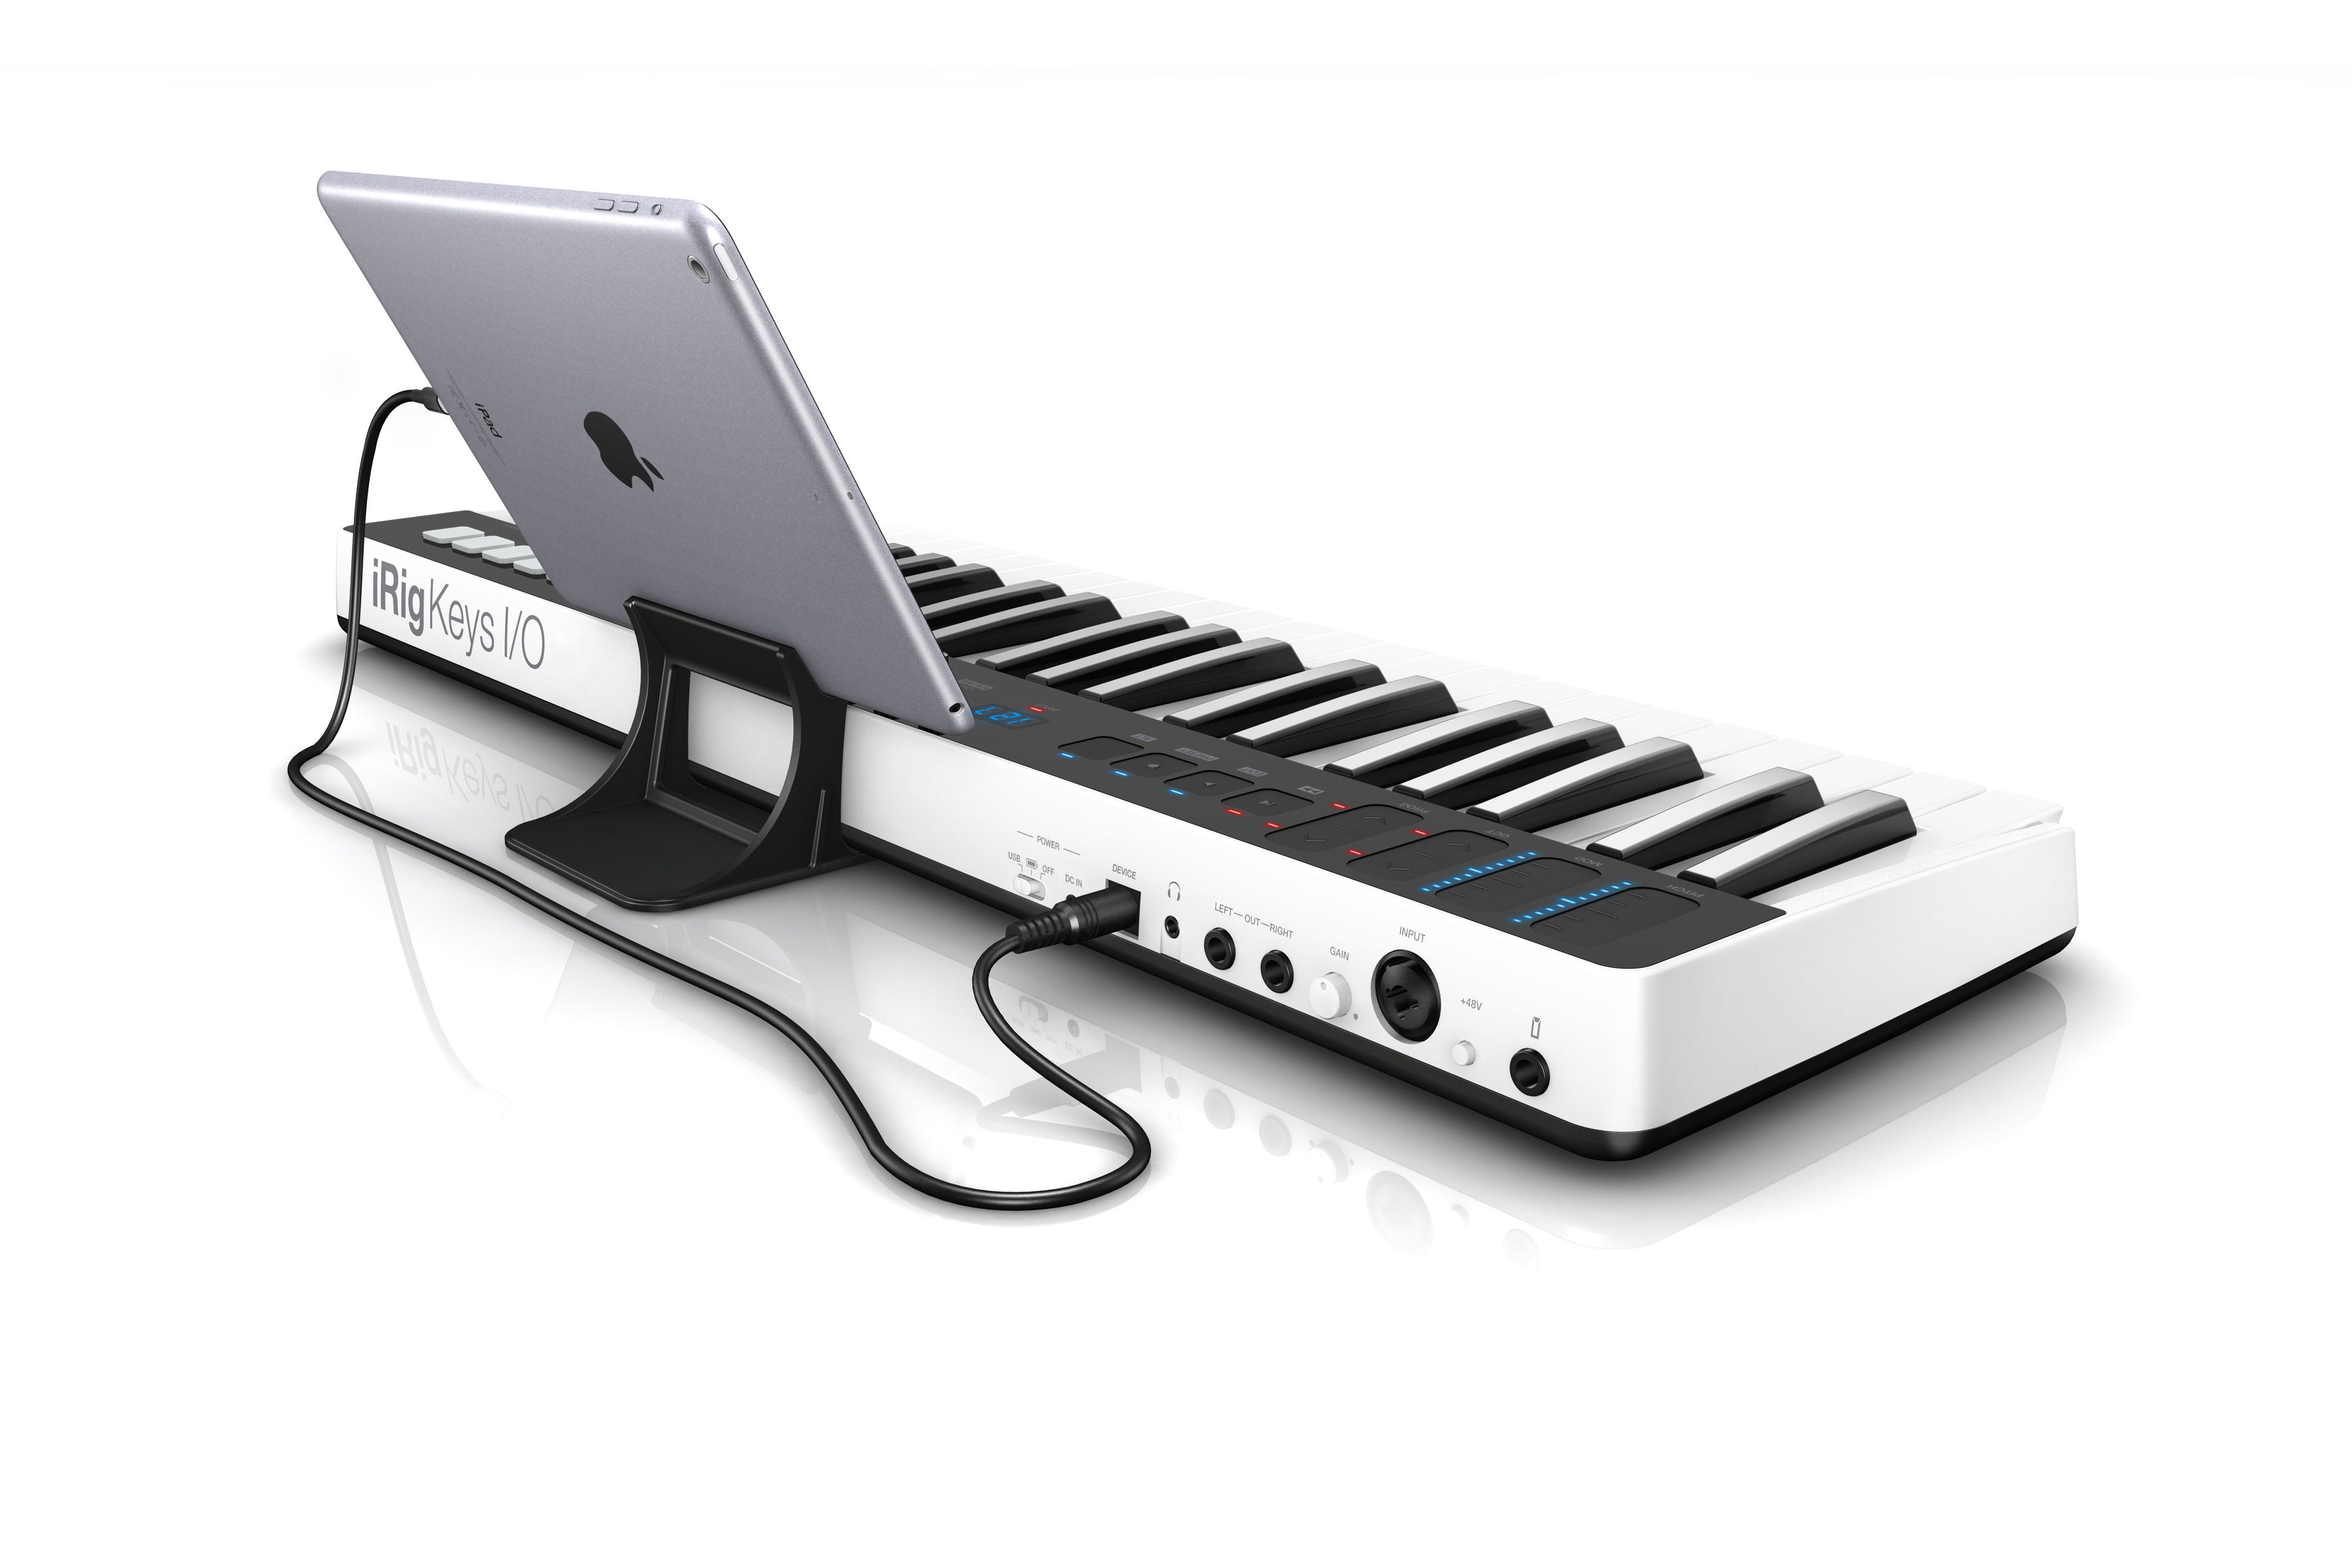 IK Multimedia Announces iRig Keys I/O - 25 Or 49-Key MIDI Controllers